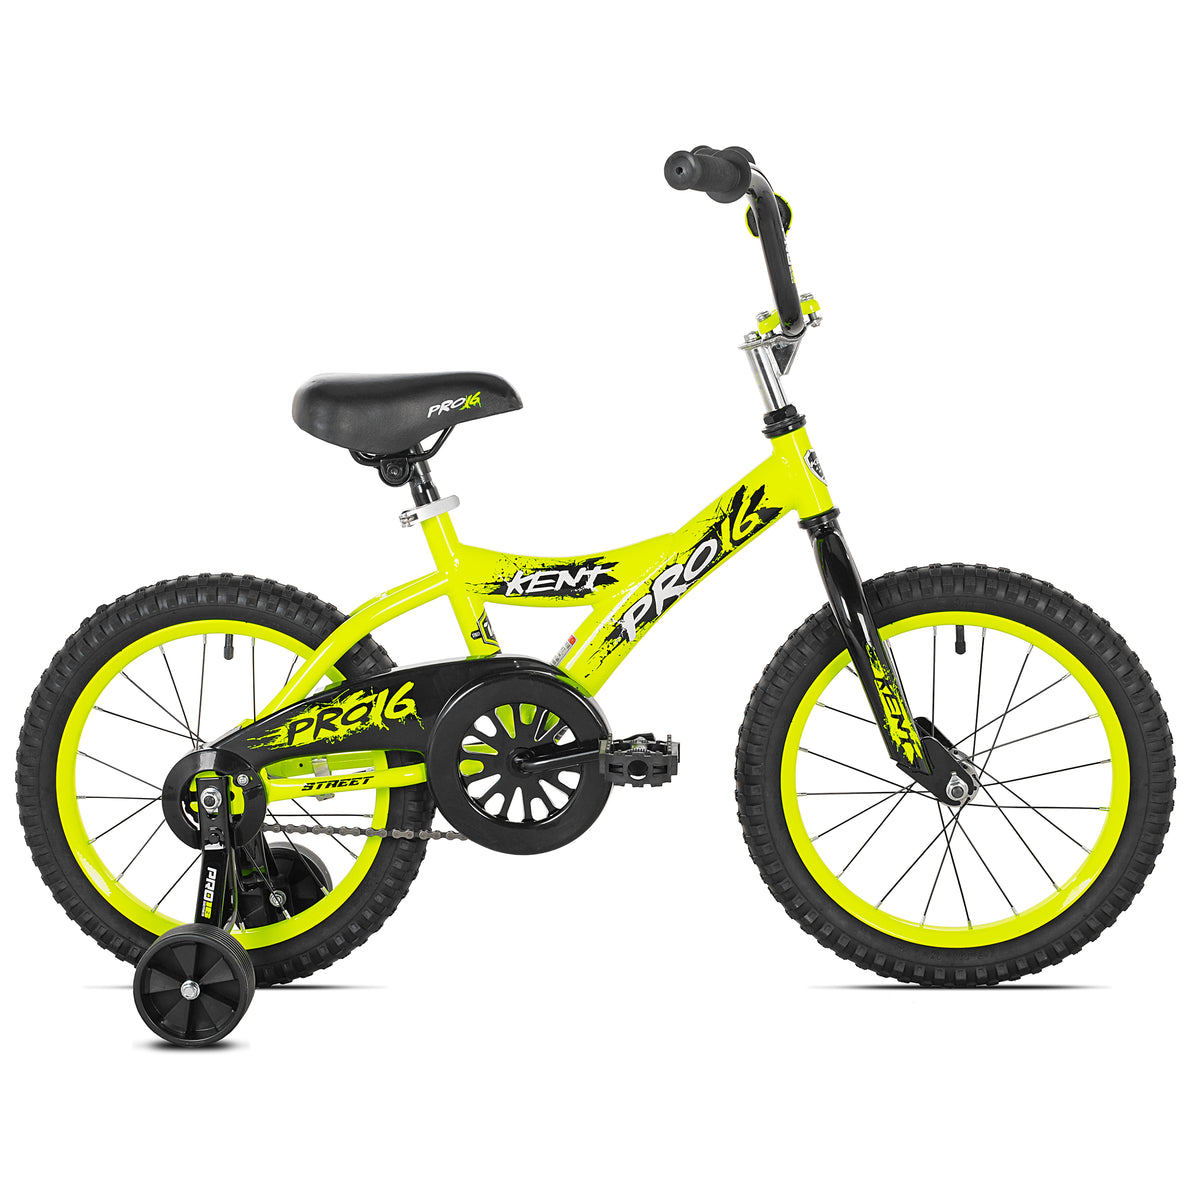 16" Kent PRO 16 | BMX Bike for Kids Ages 4-6